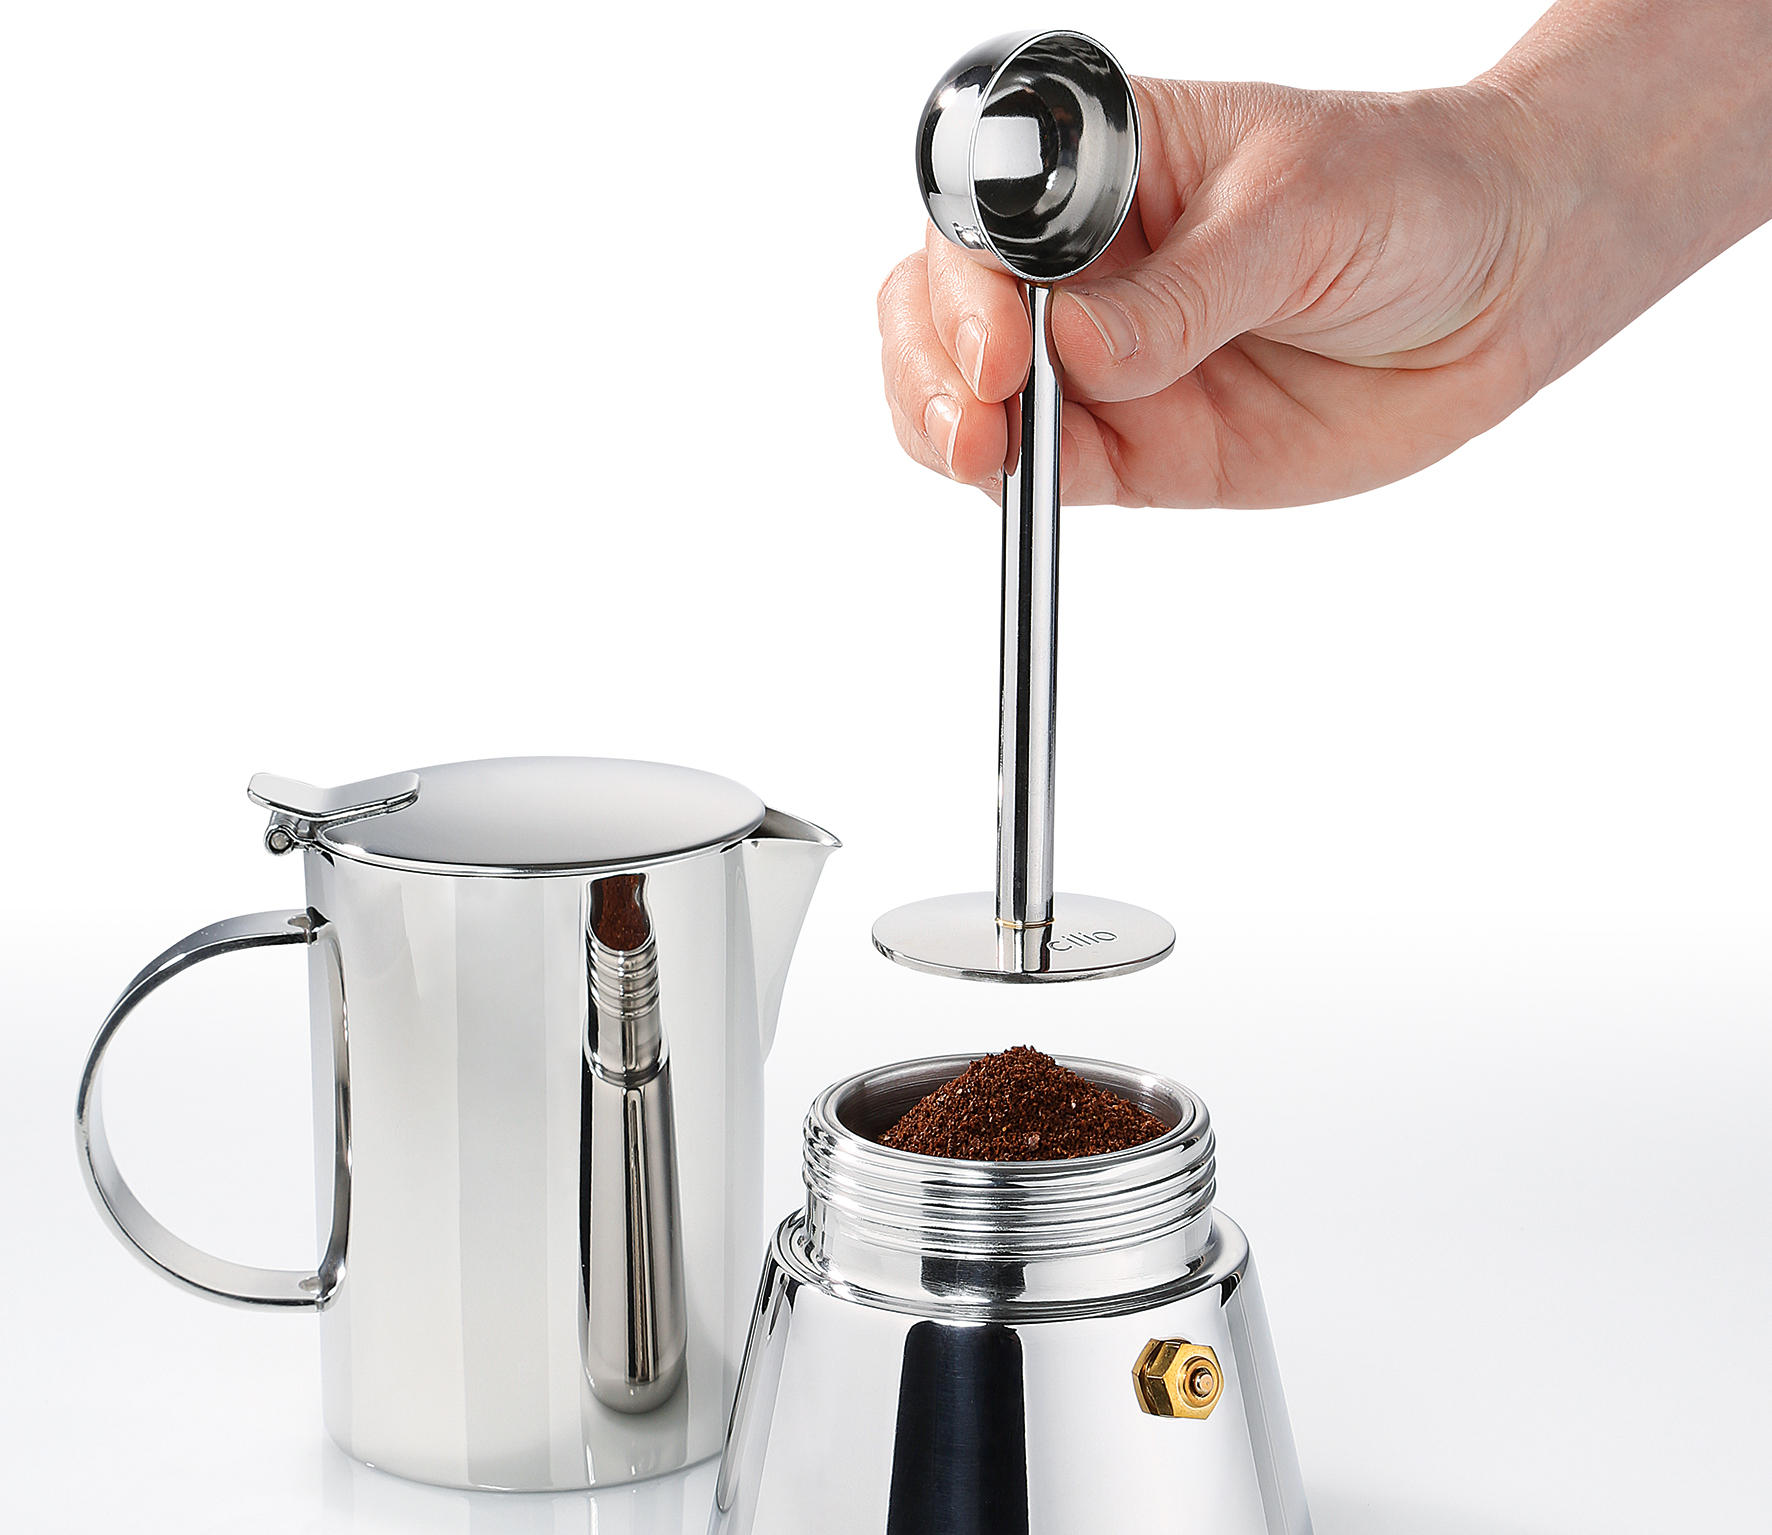 Cilio - Espressodrücker mit 5g Kaffeelot